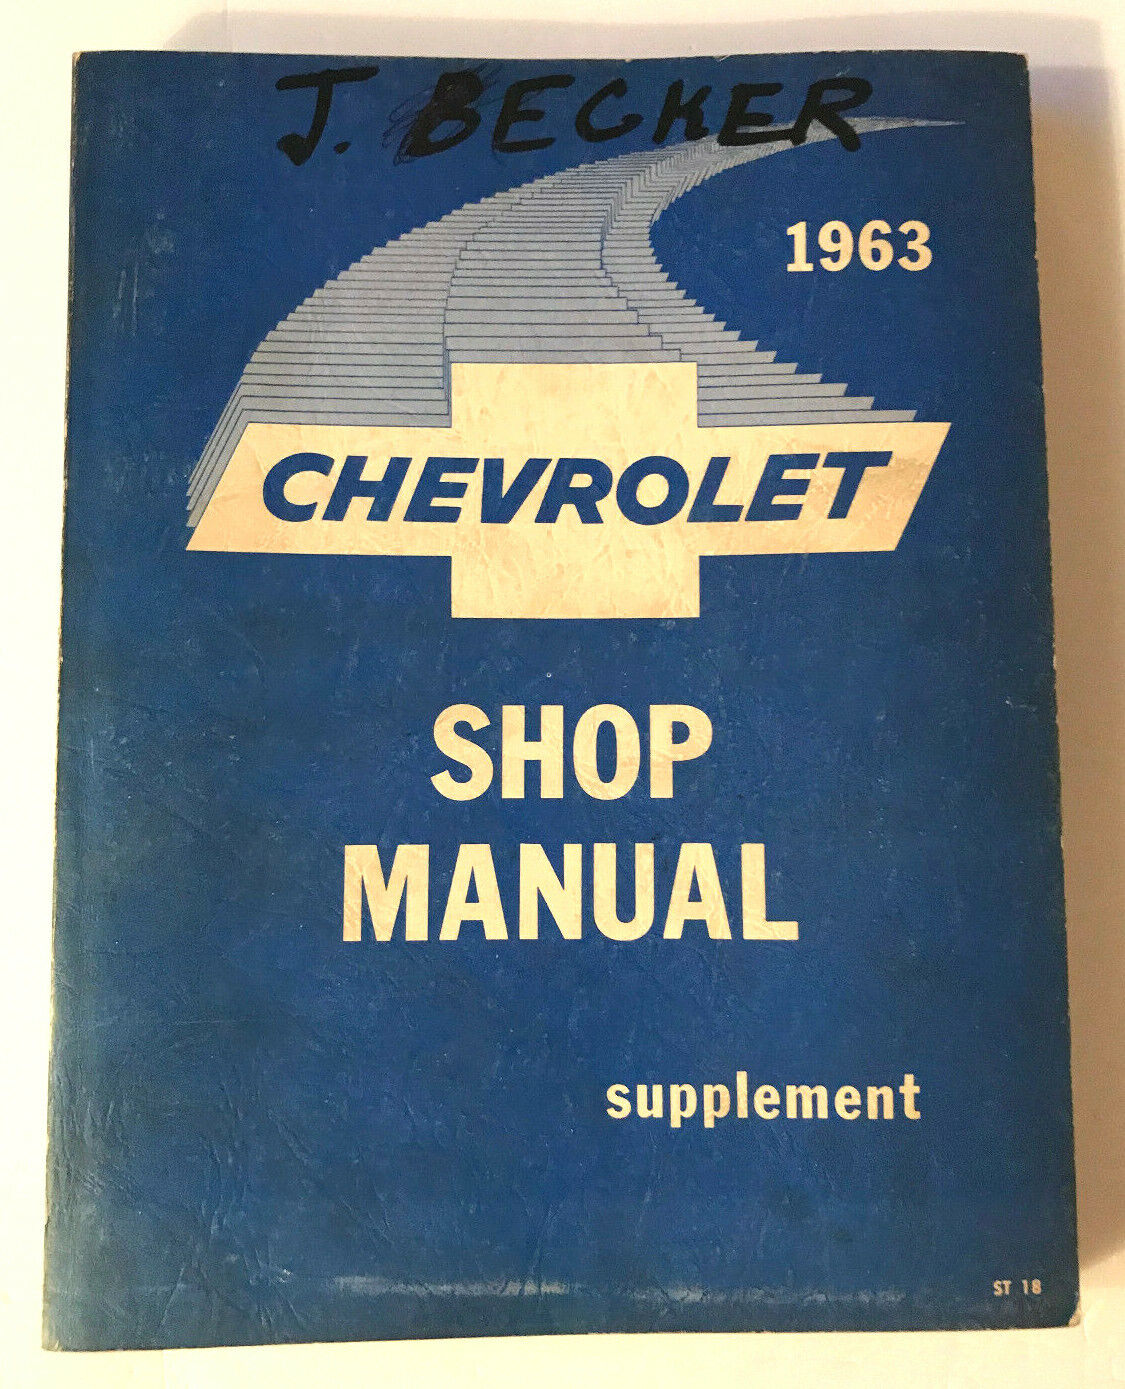 VTG 1963 Chevrolet Supplement Car Shop Service Repair Original Dealer Manual